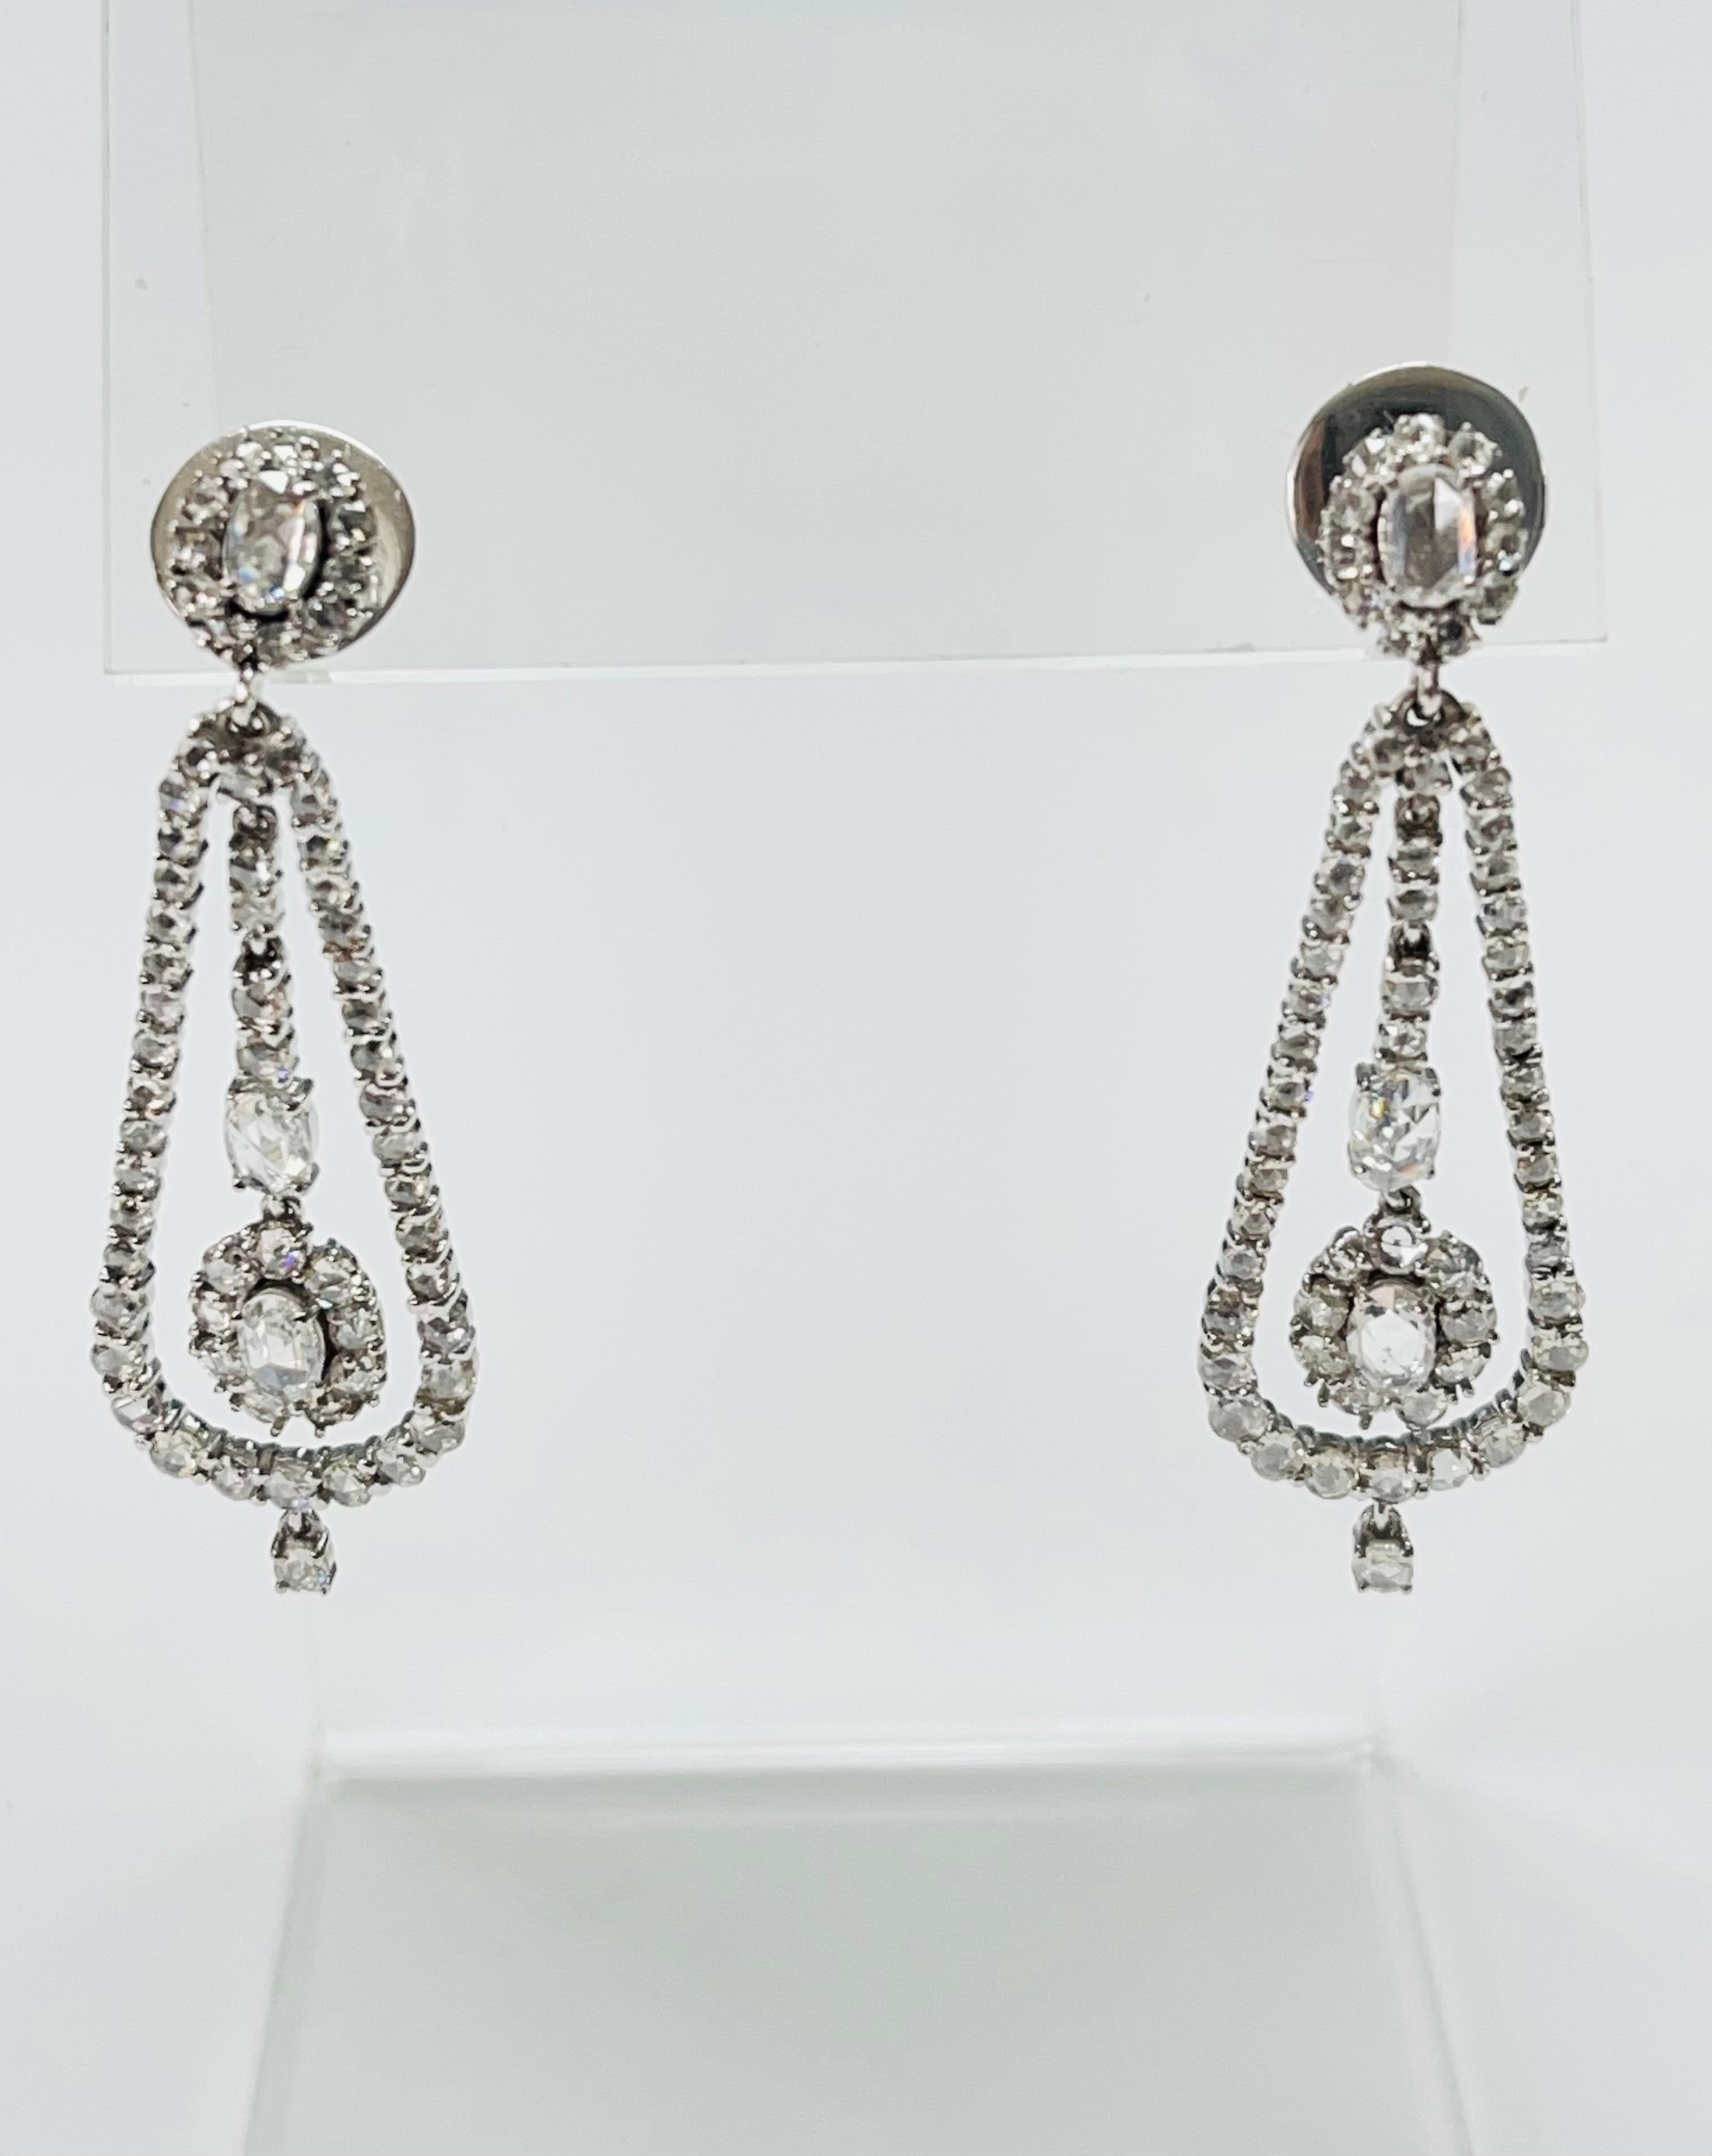 Contemporary Rose Cut Diamond Chandelier Earrings In 18K White Gold.  For Sale